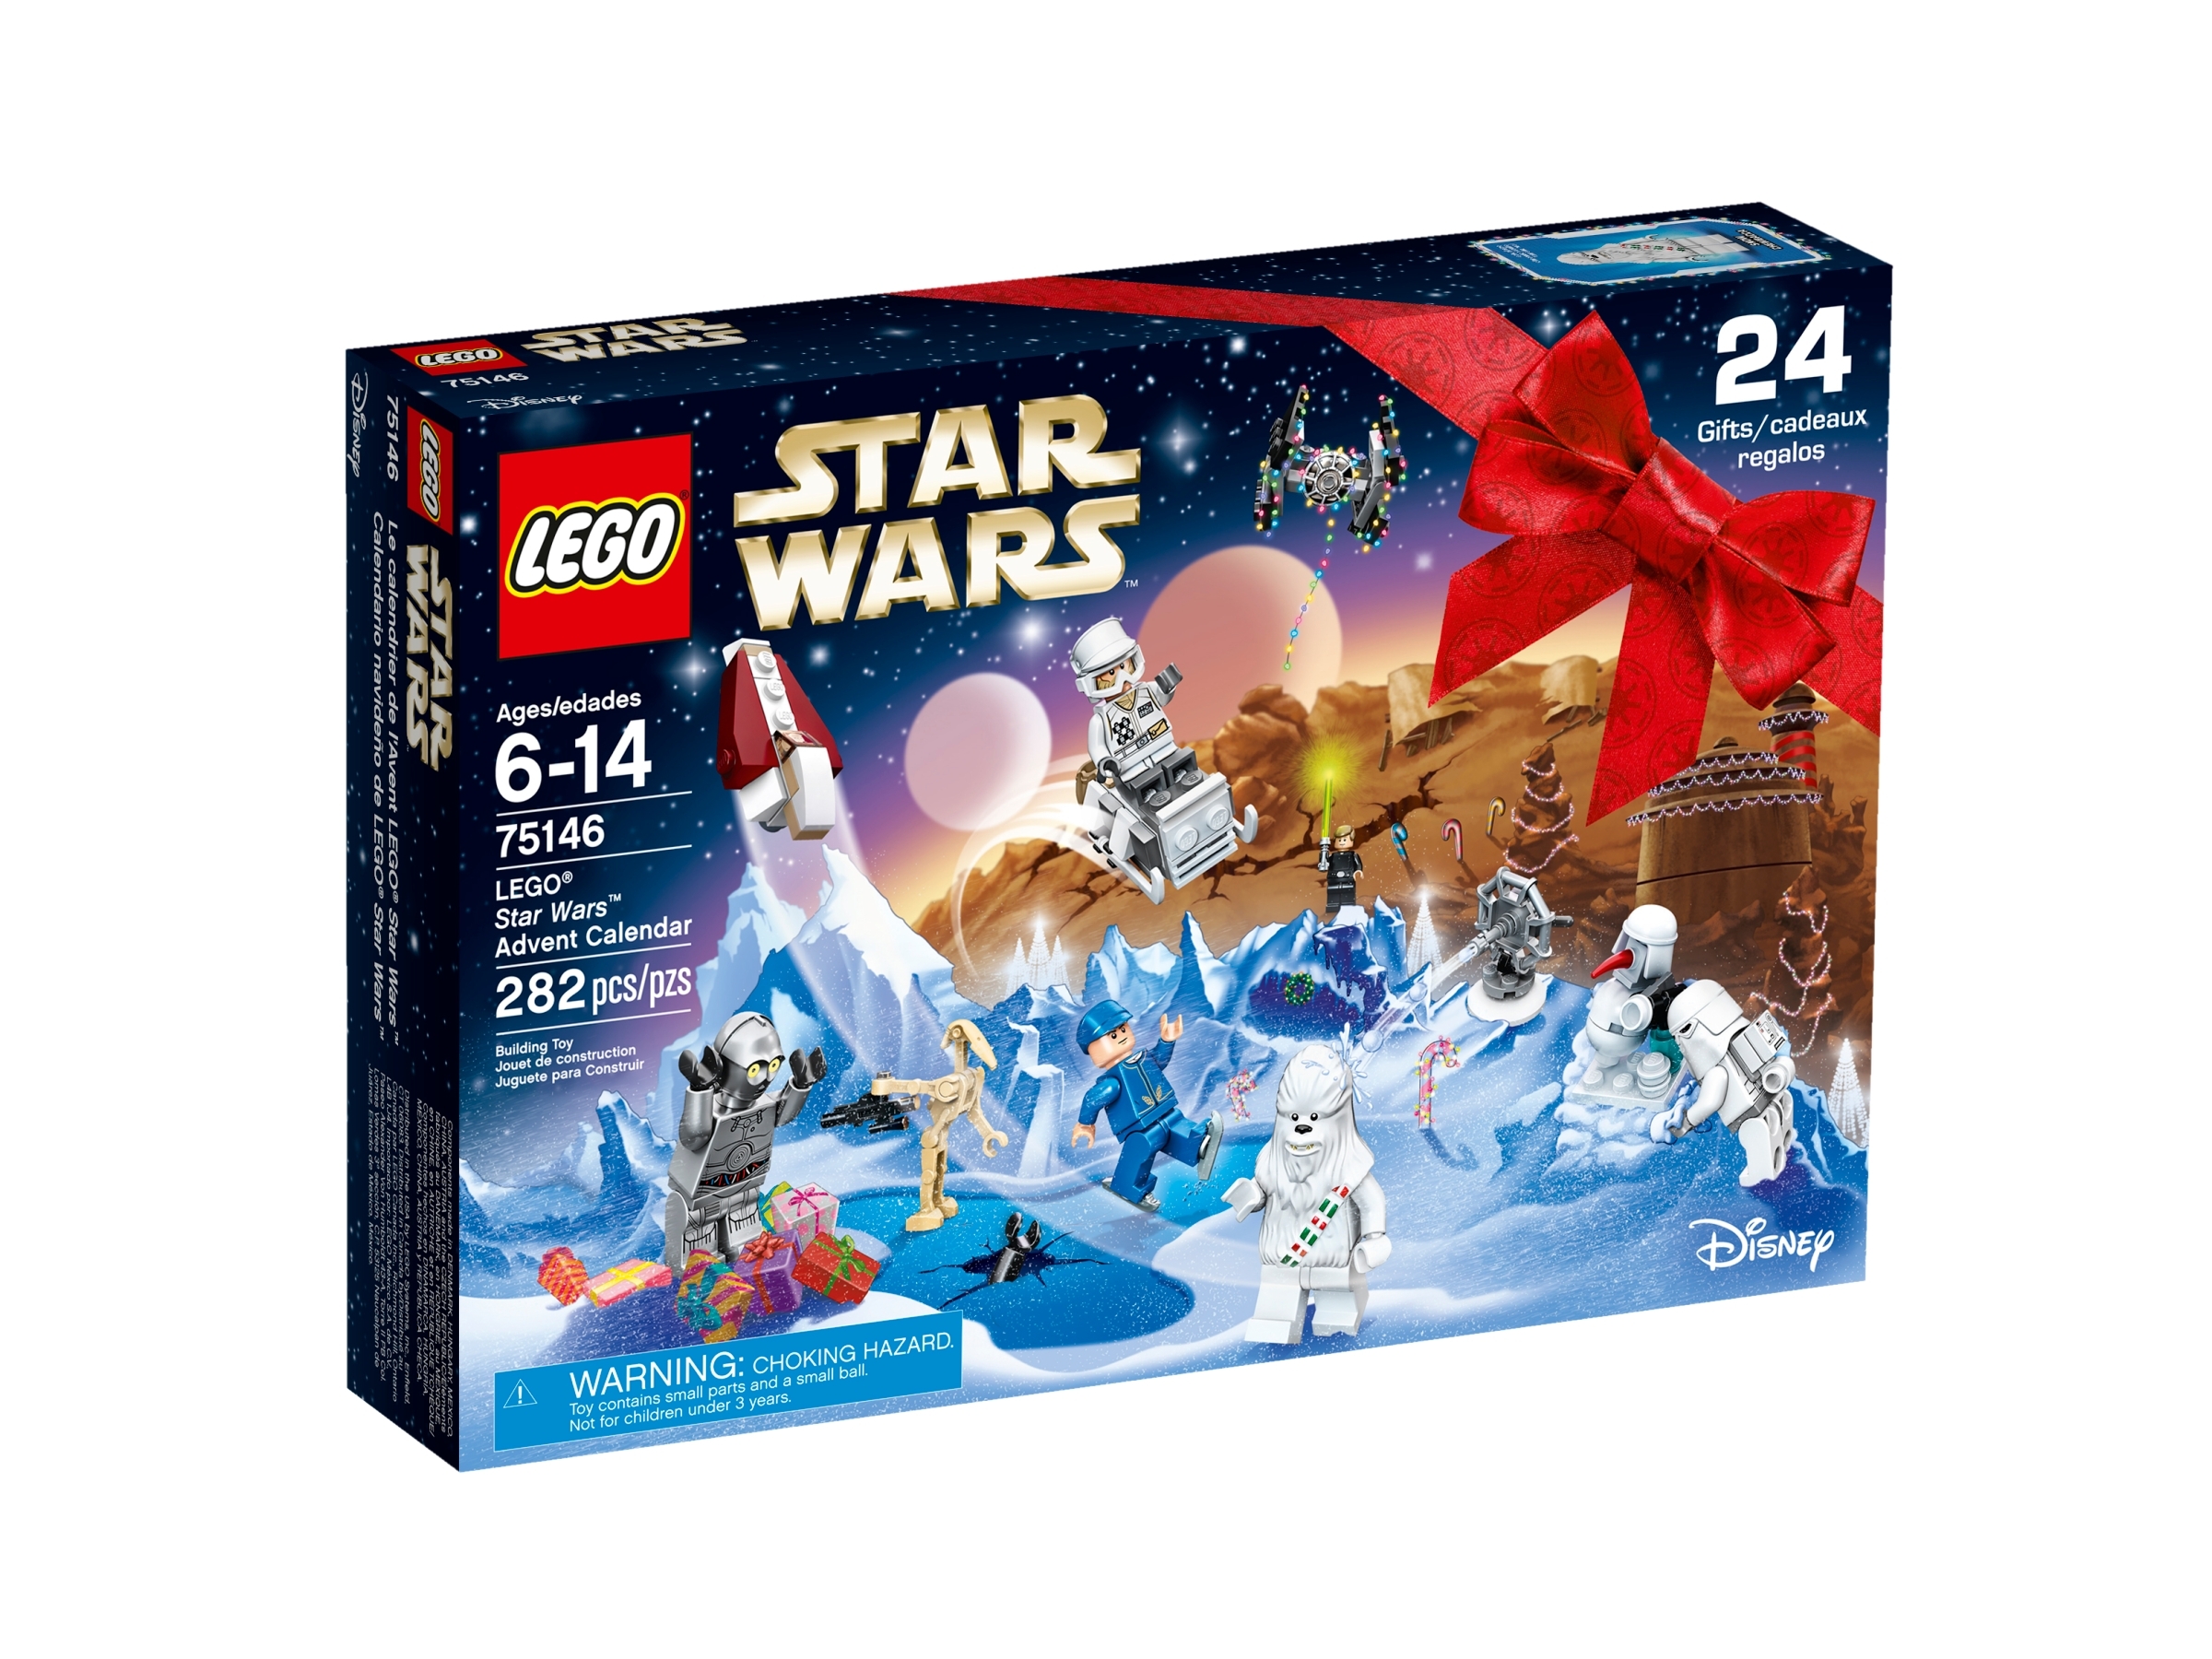 Lego Star-Wars Disney calendrier de l'Avent Noël Calendrier 2018 NEUF 